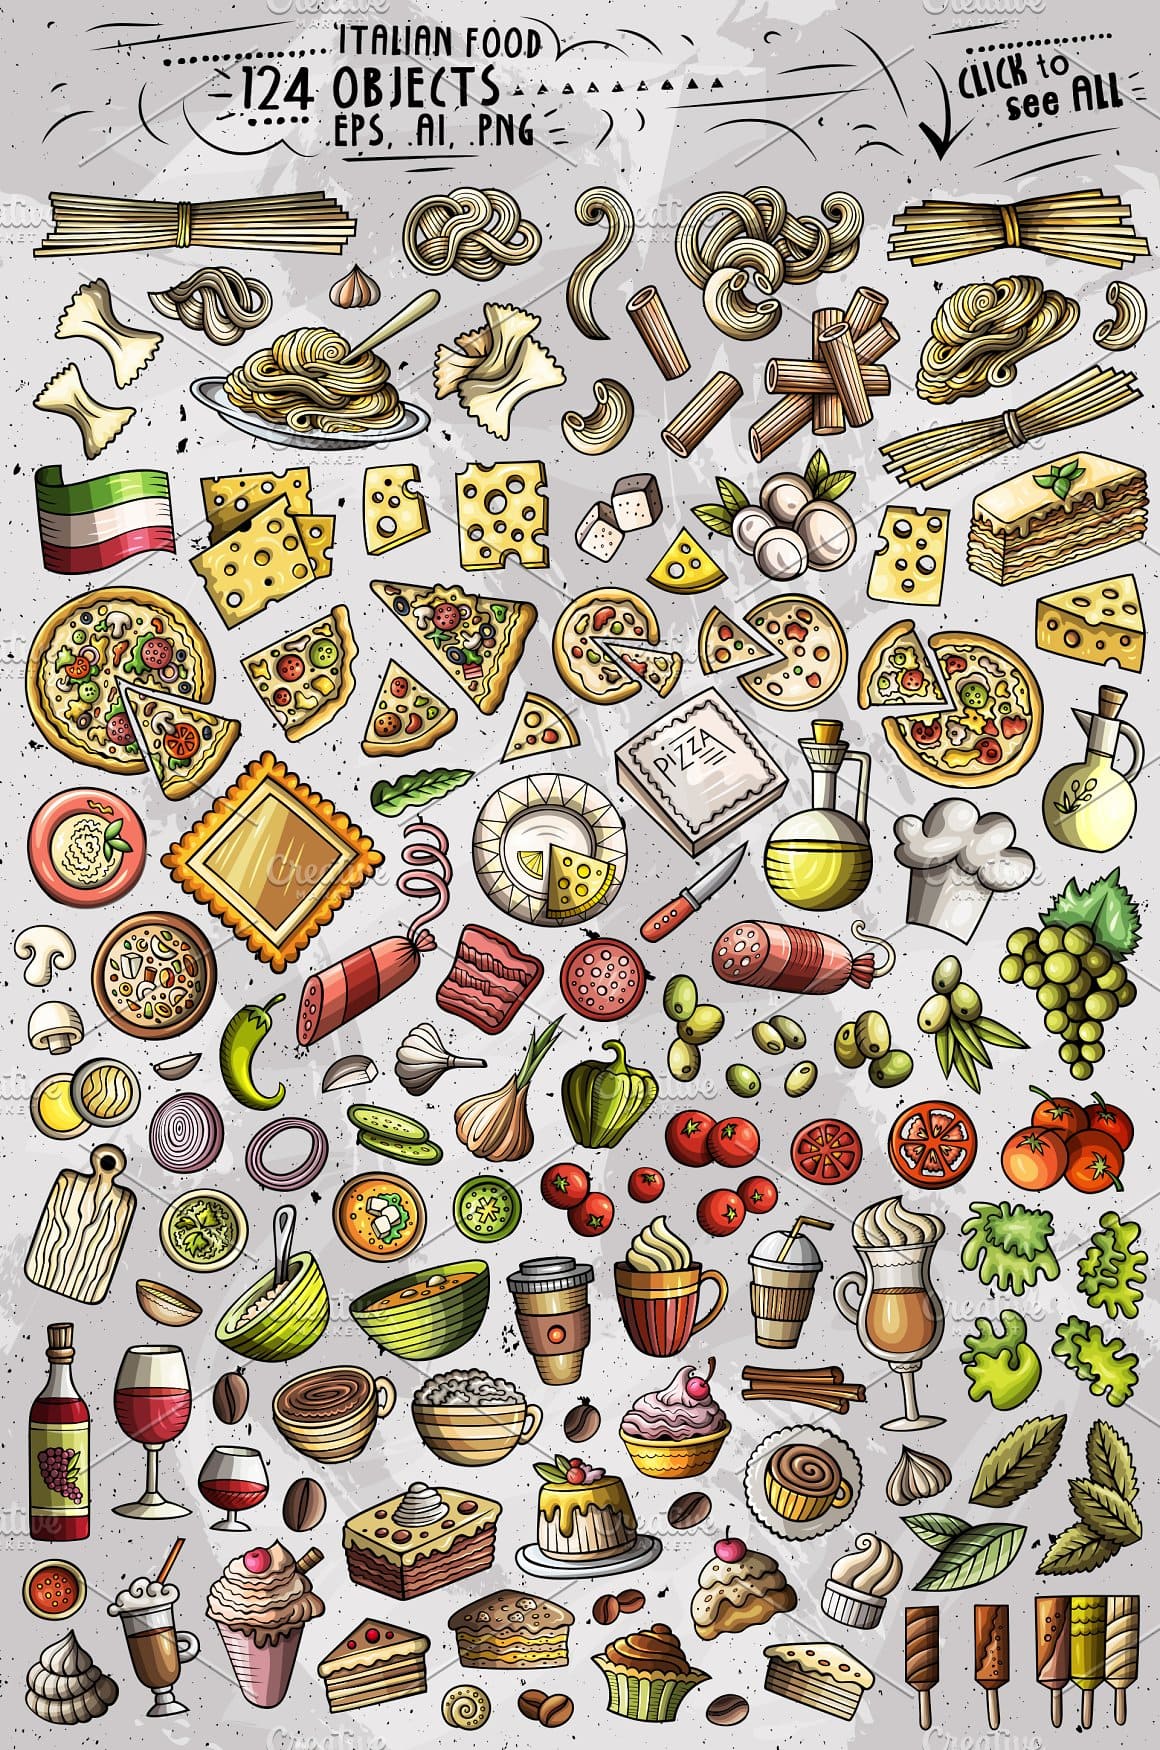 Italian Food Cartoon Objects Set Preview 2.